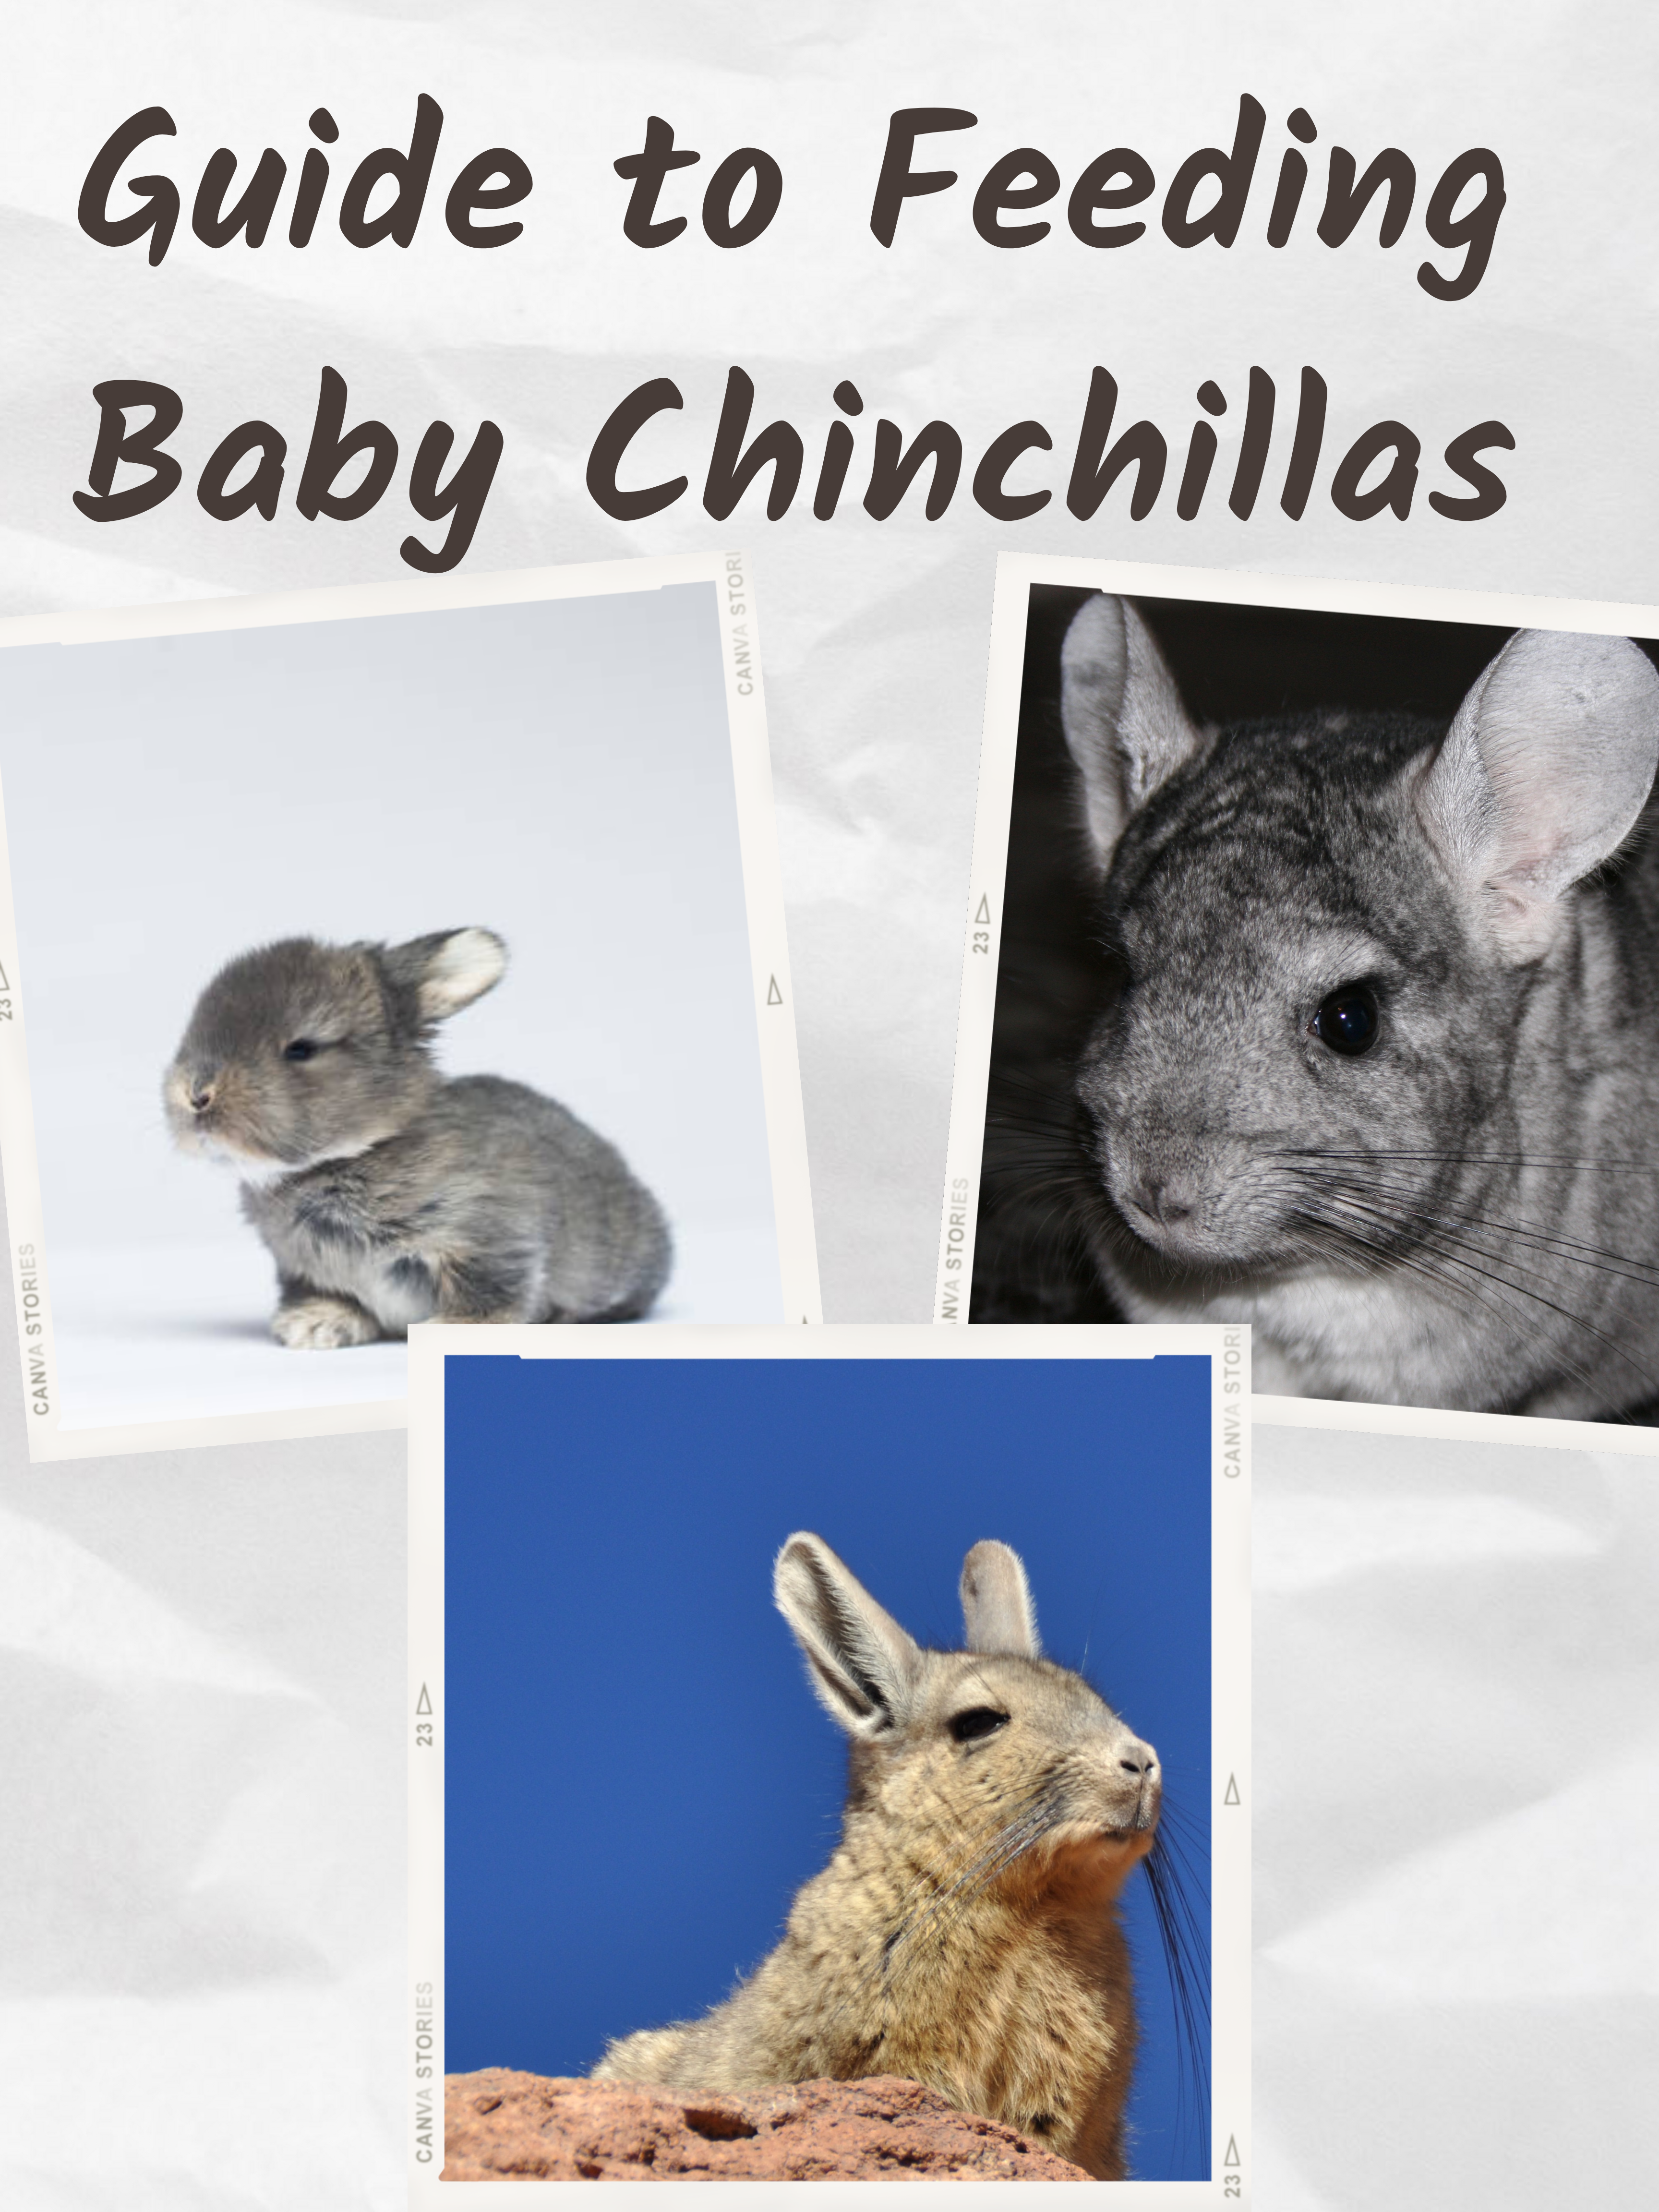 Guide to Feeding Baby Chinchillas